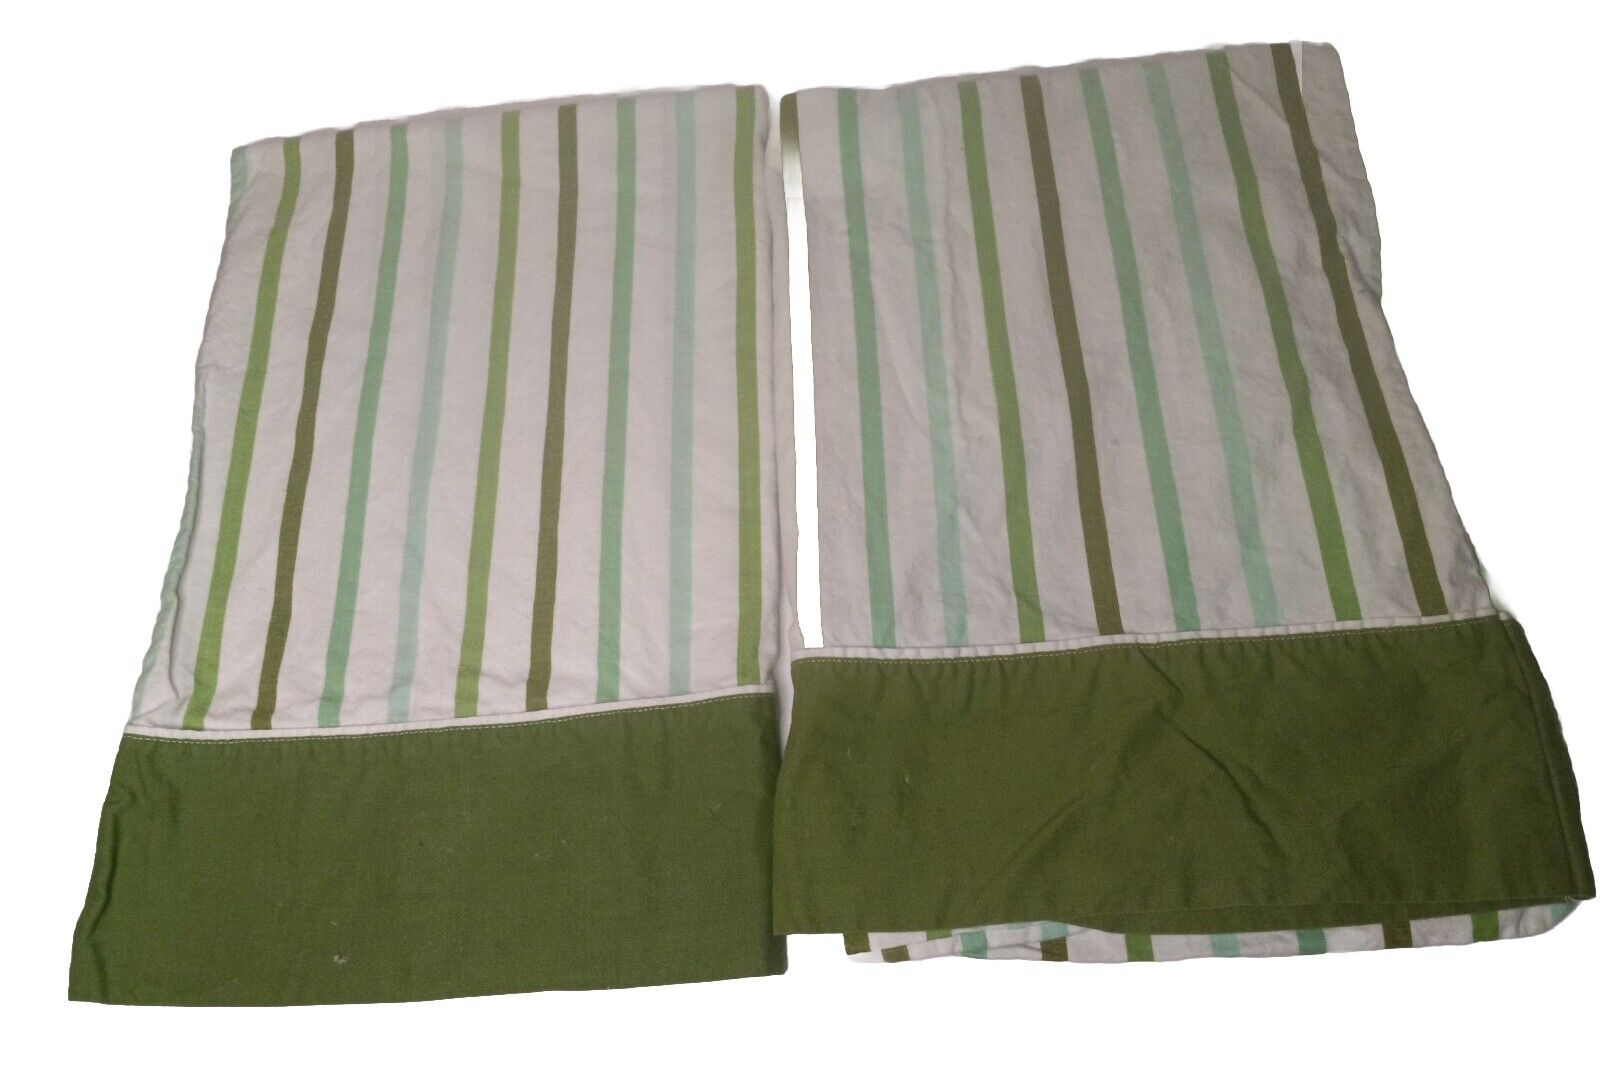 Vintage Mid-Century Mod 1970s Green Striped Pillowcases (2)